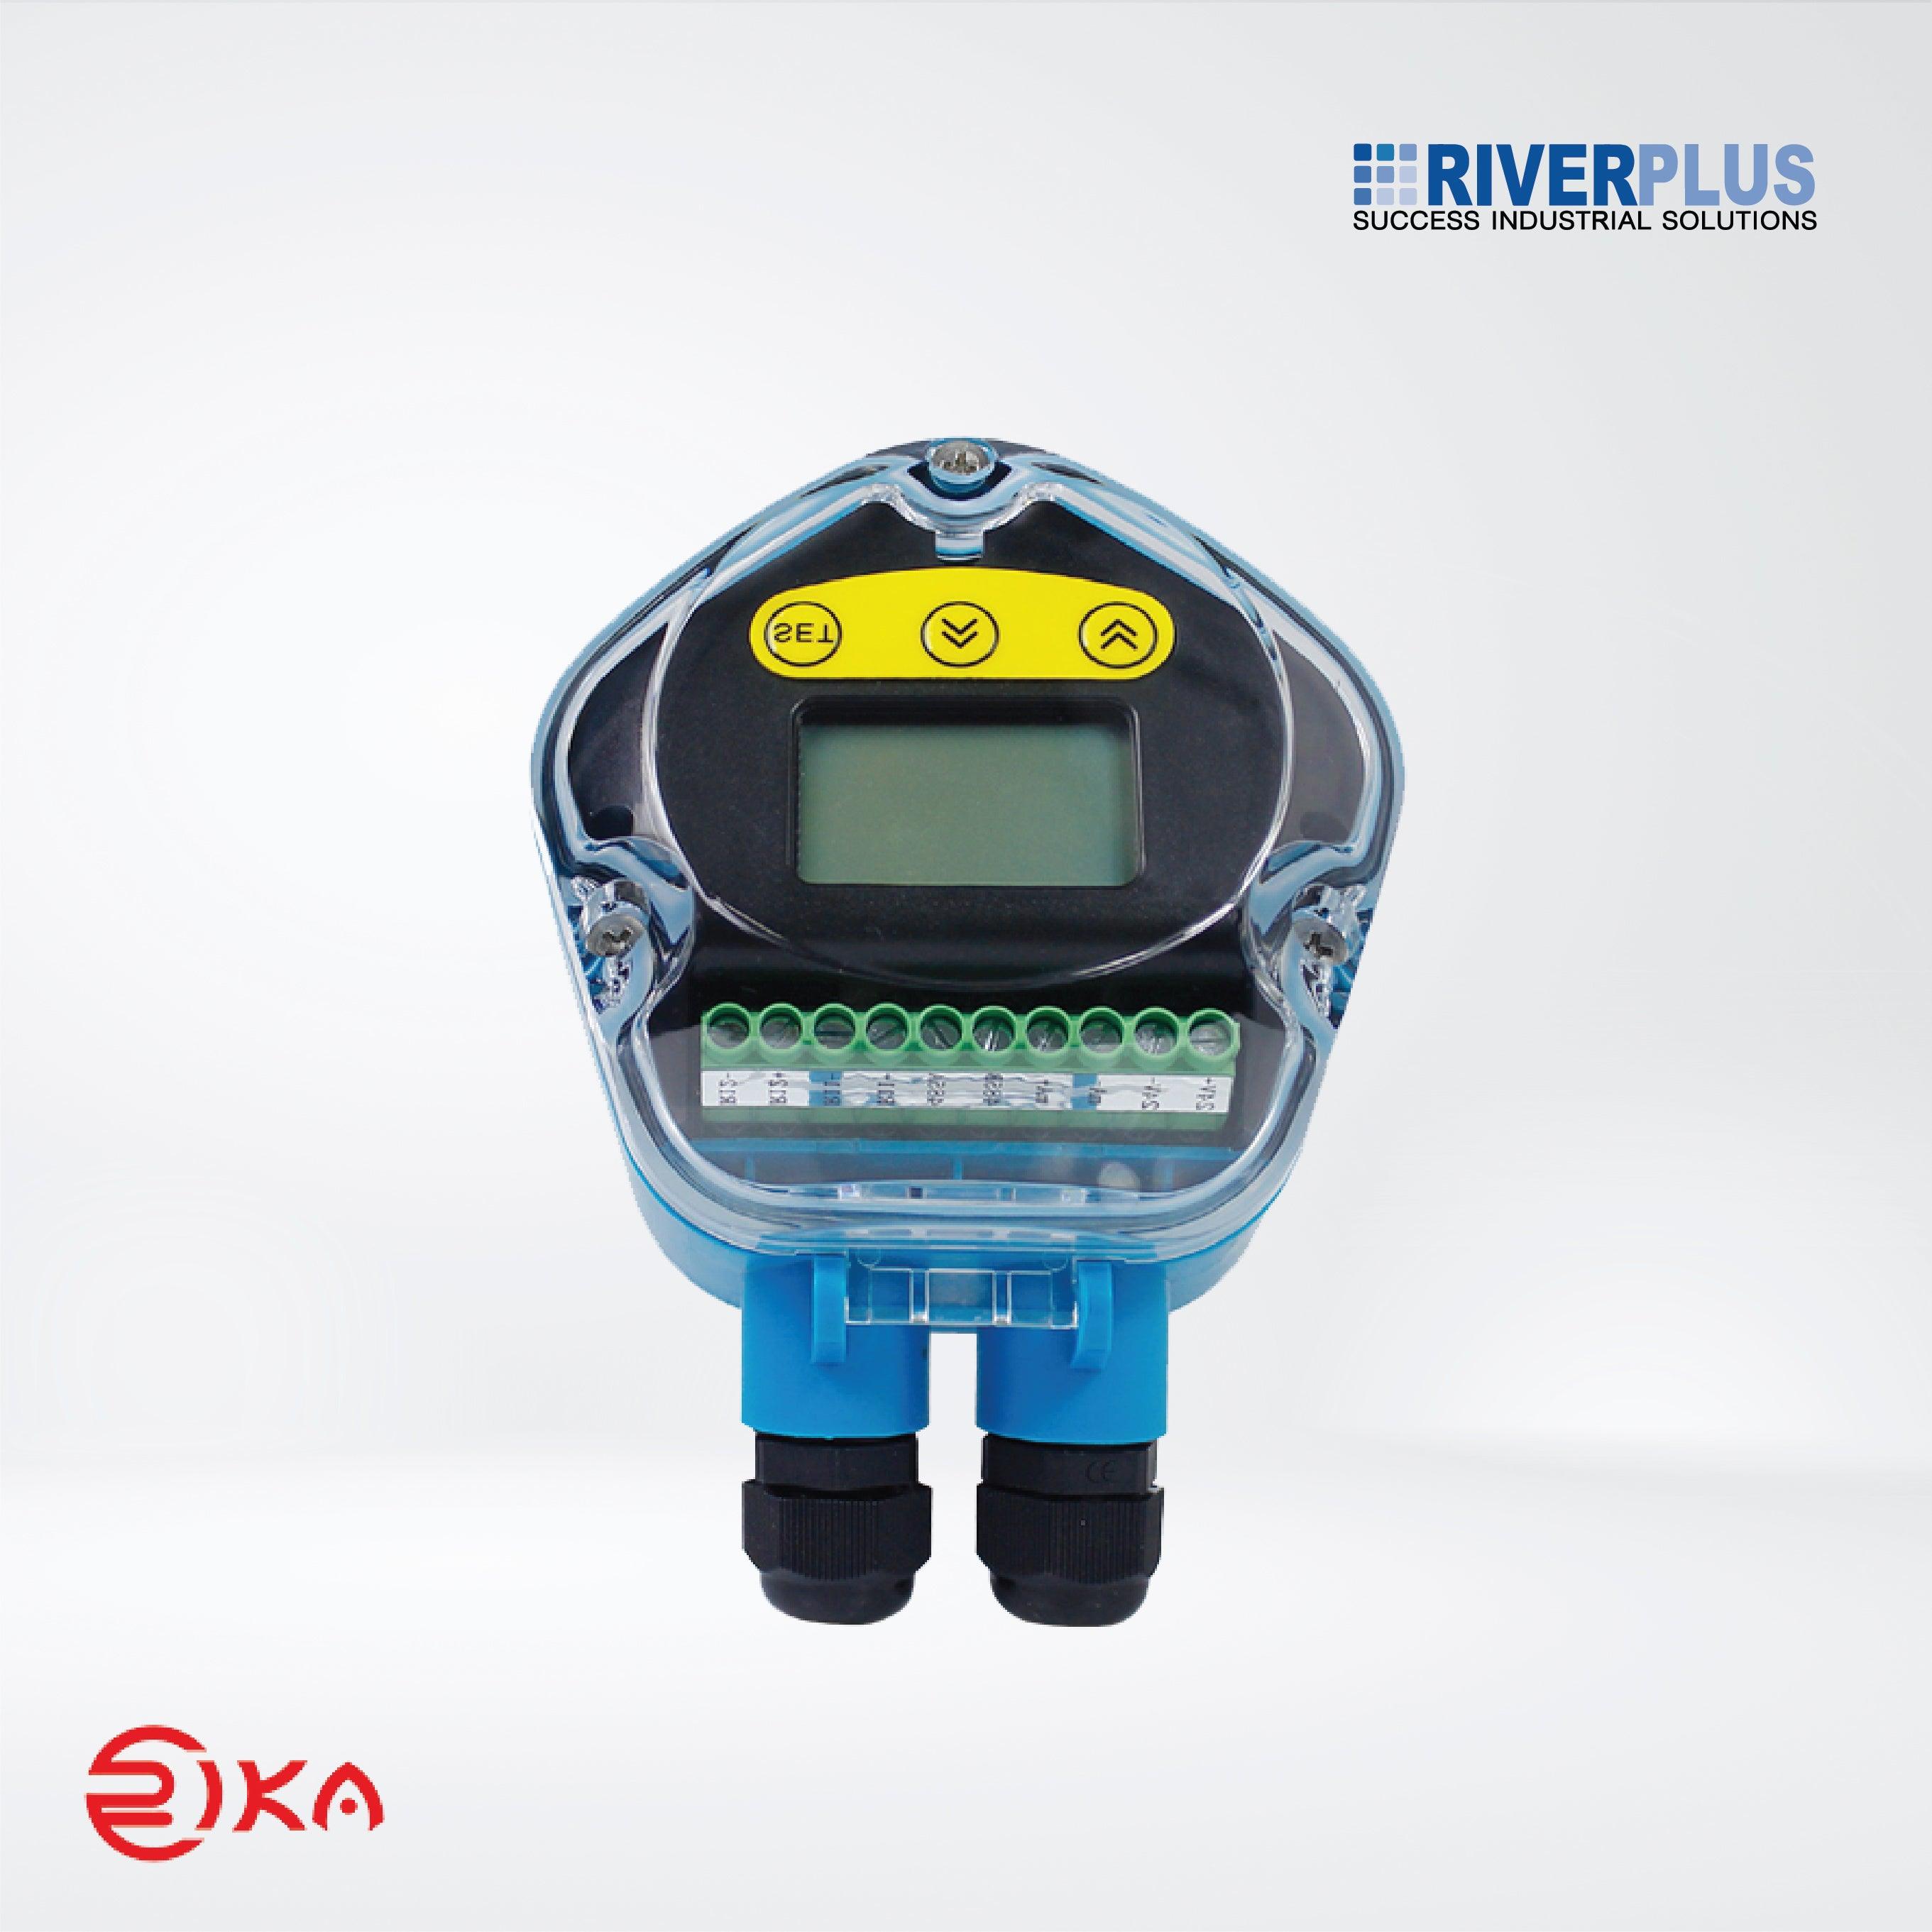 RKL-03 Ultrasonic Liquid Level Transmitter - Riverplus